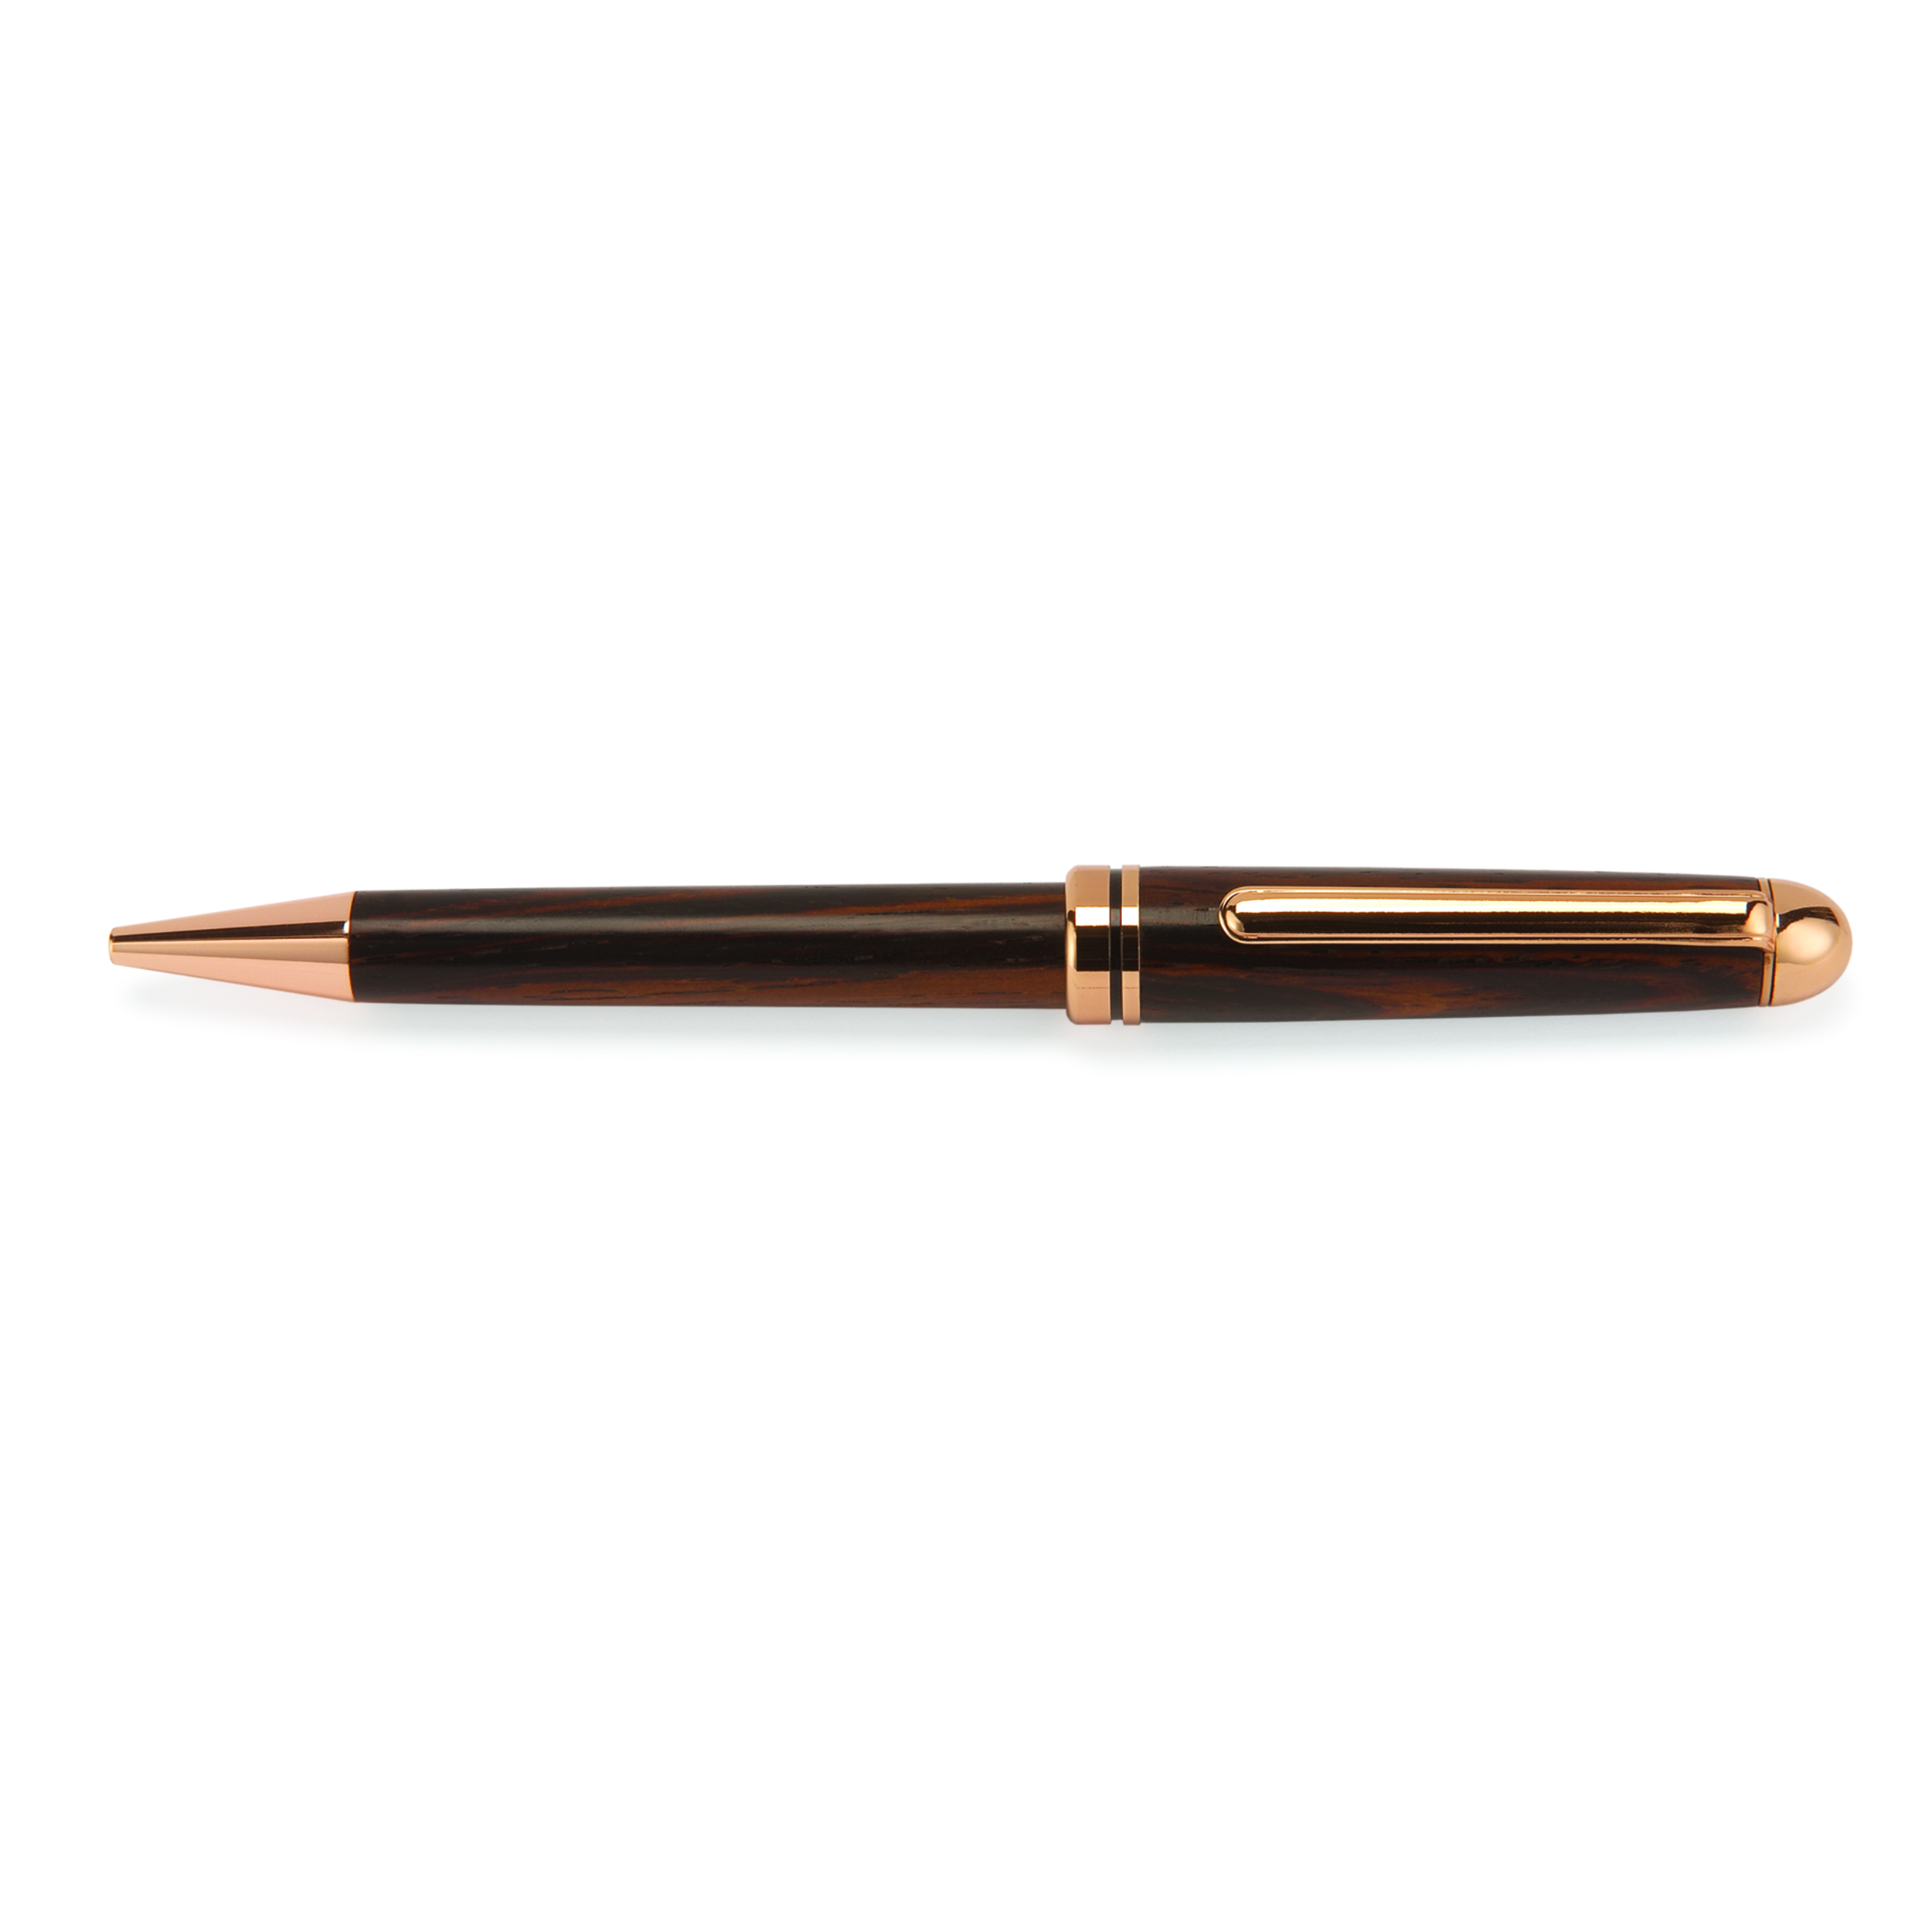 European Style Ballpoint Pen Kit - Bright Copper